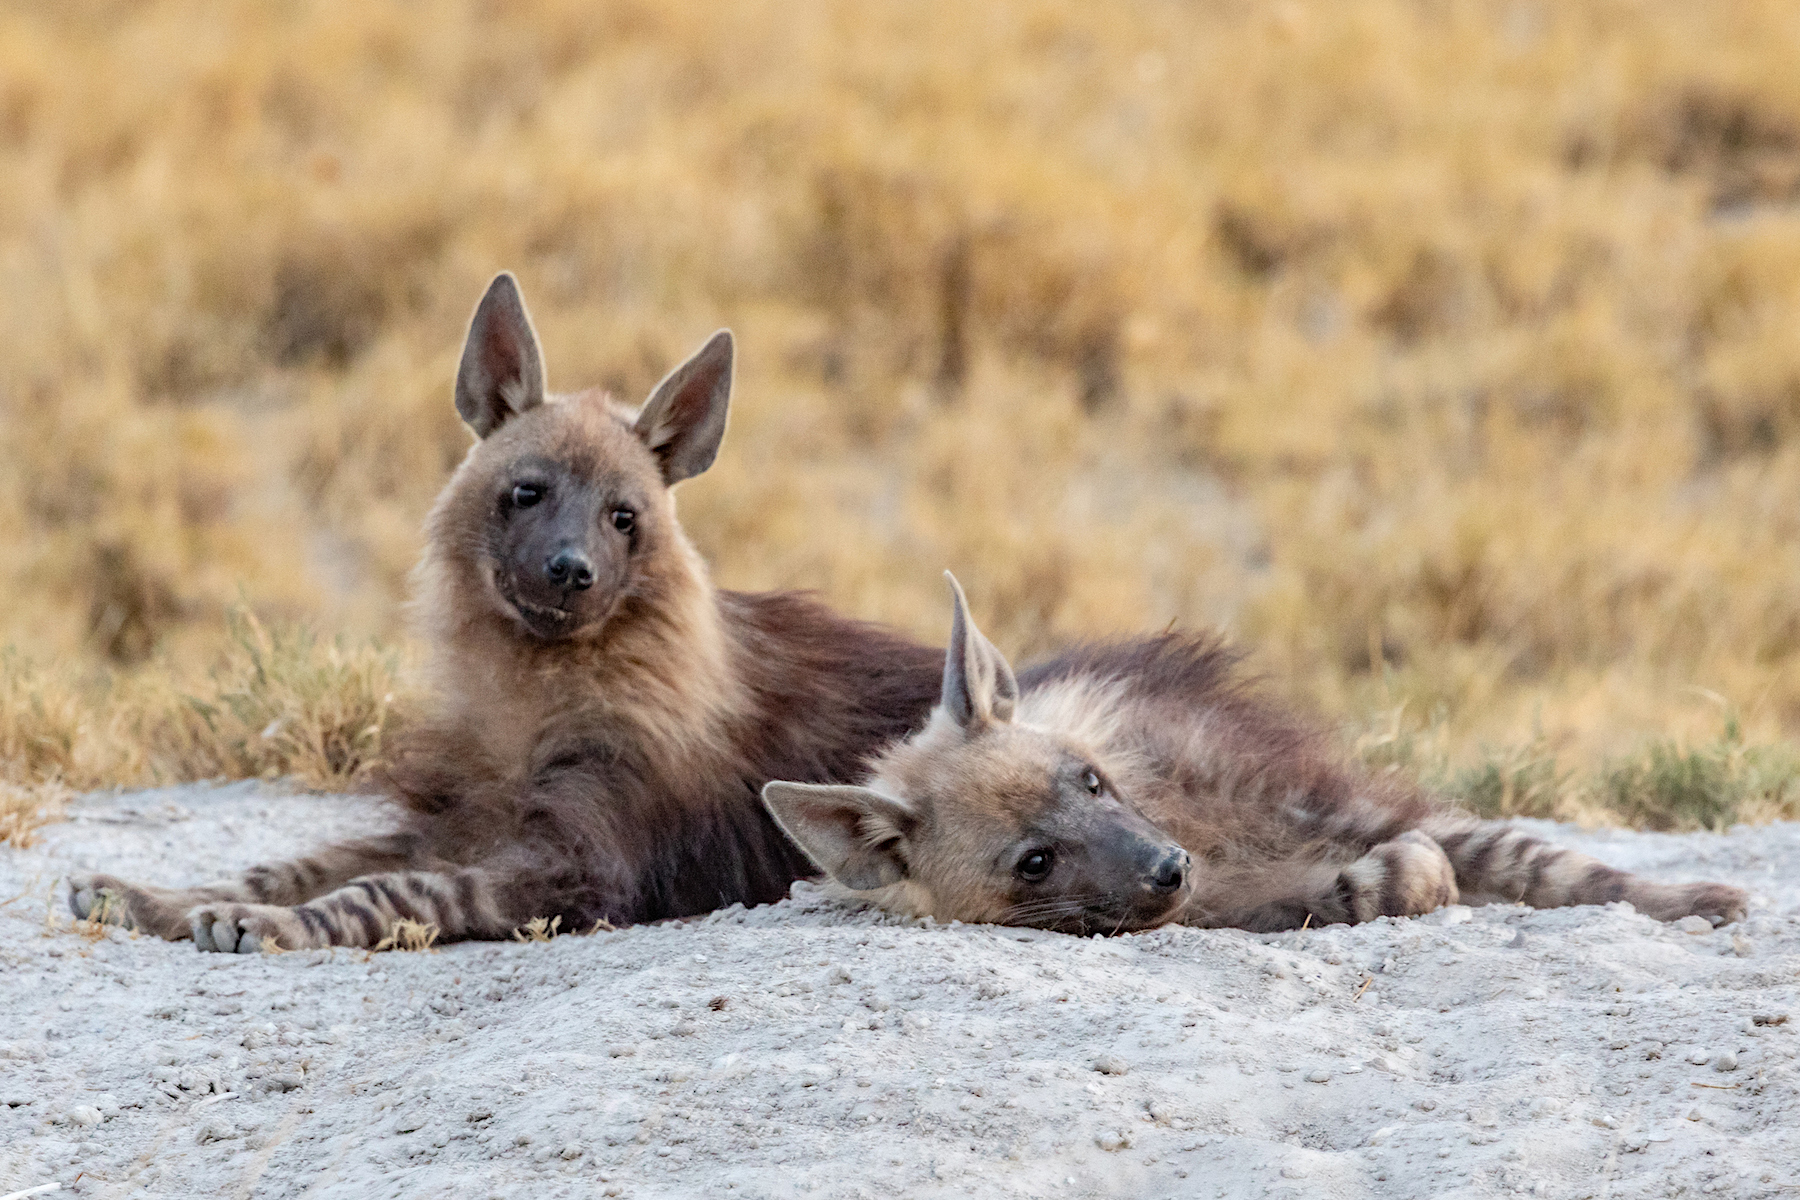 Brown Hyena photography on our wildlife photography tour to Botswana